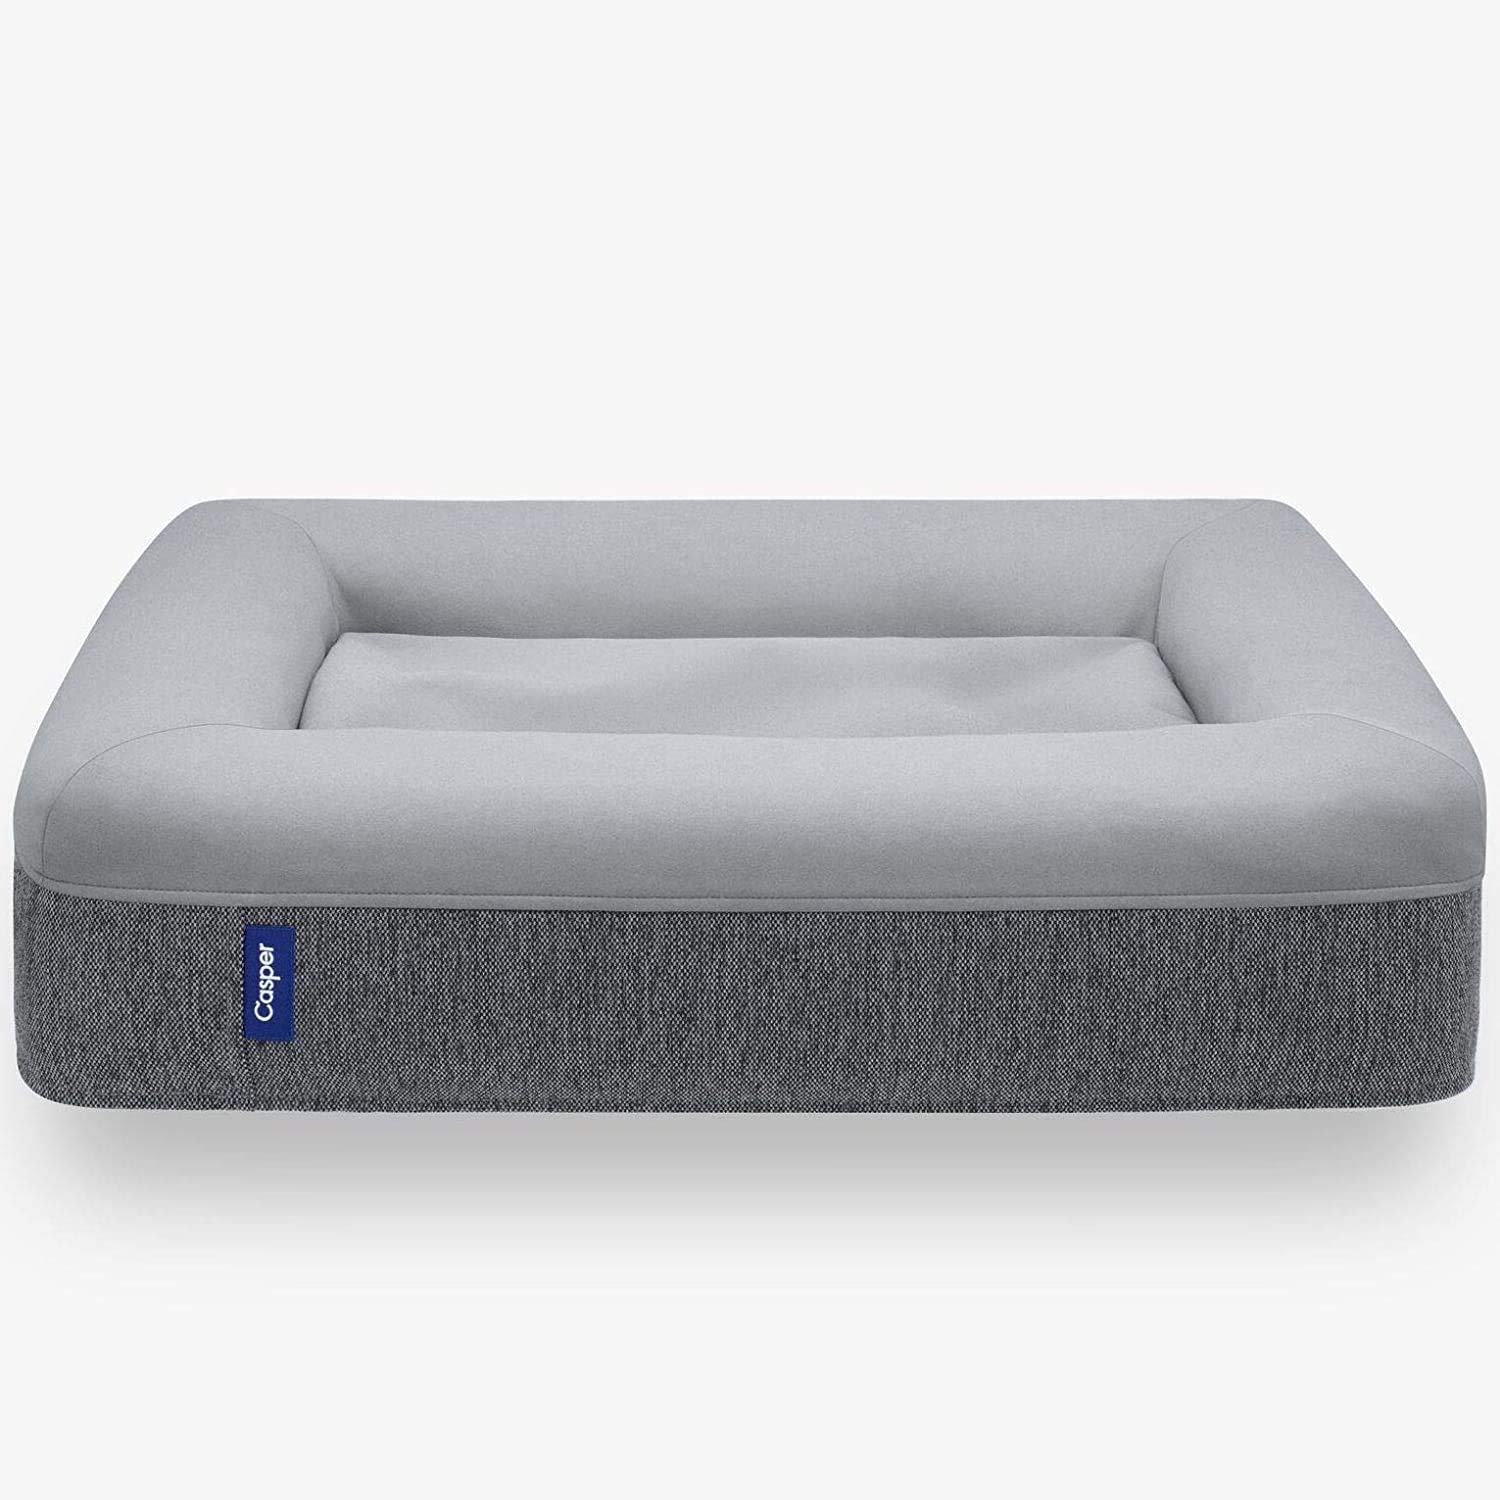 Casper Dog Bed Plush Memory Foam (Large, Gray) $139 + Free Shipping